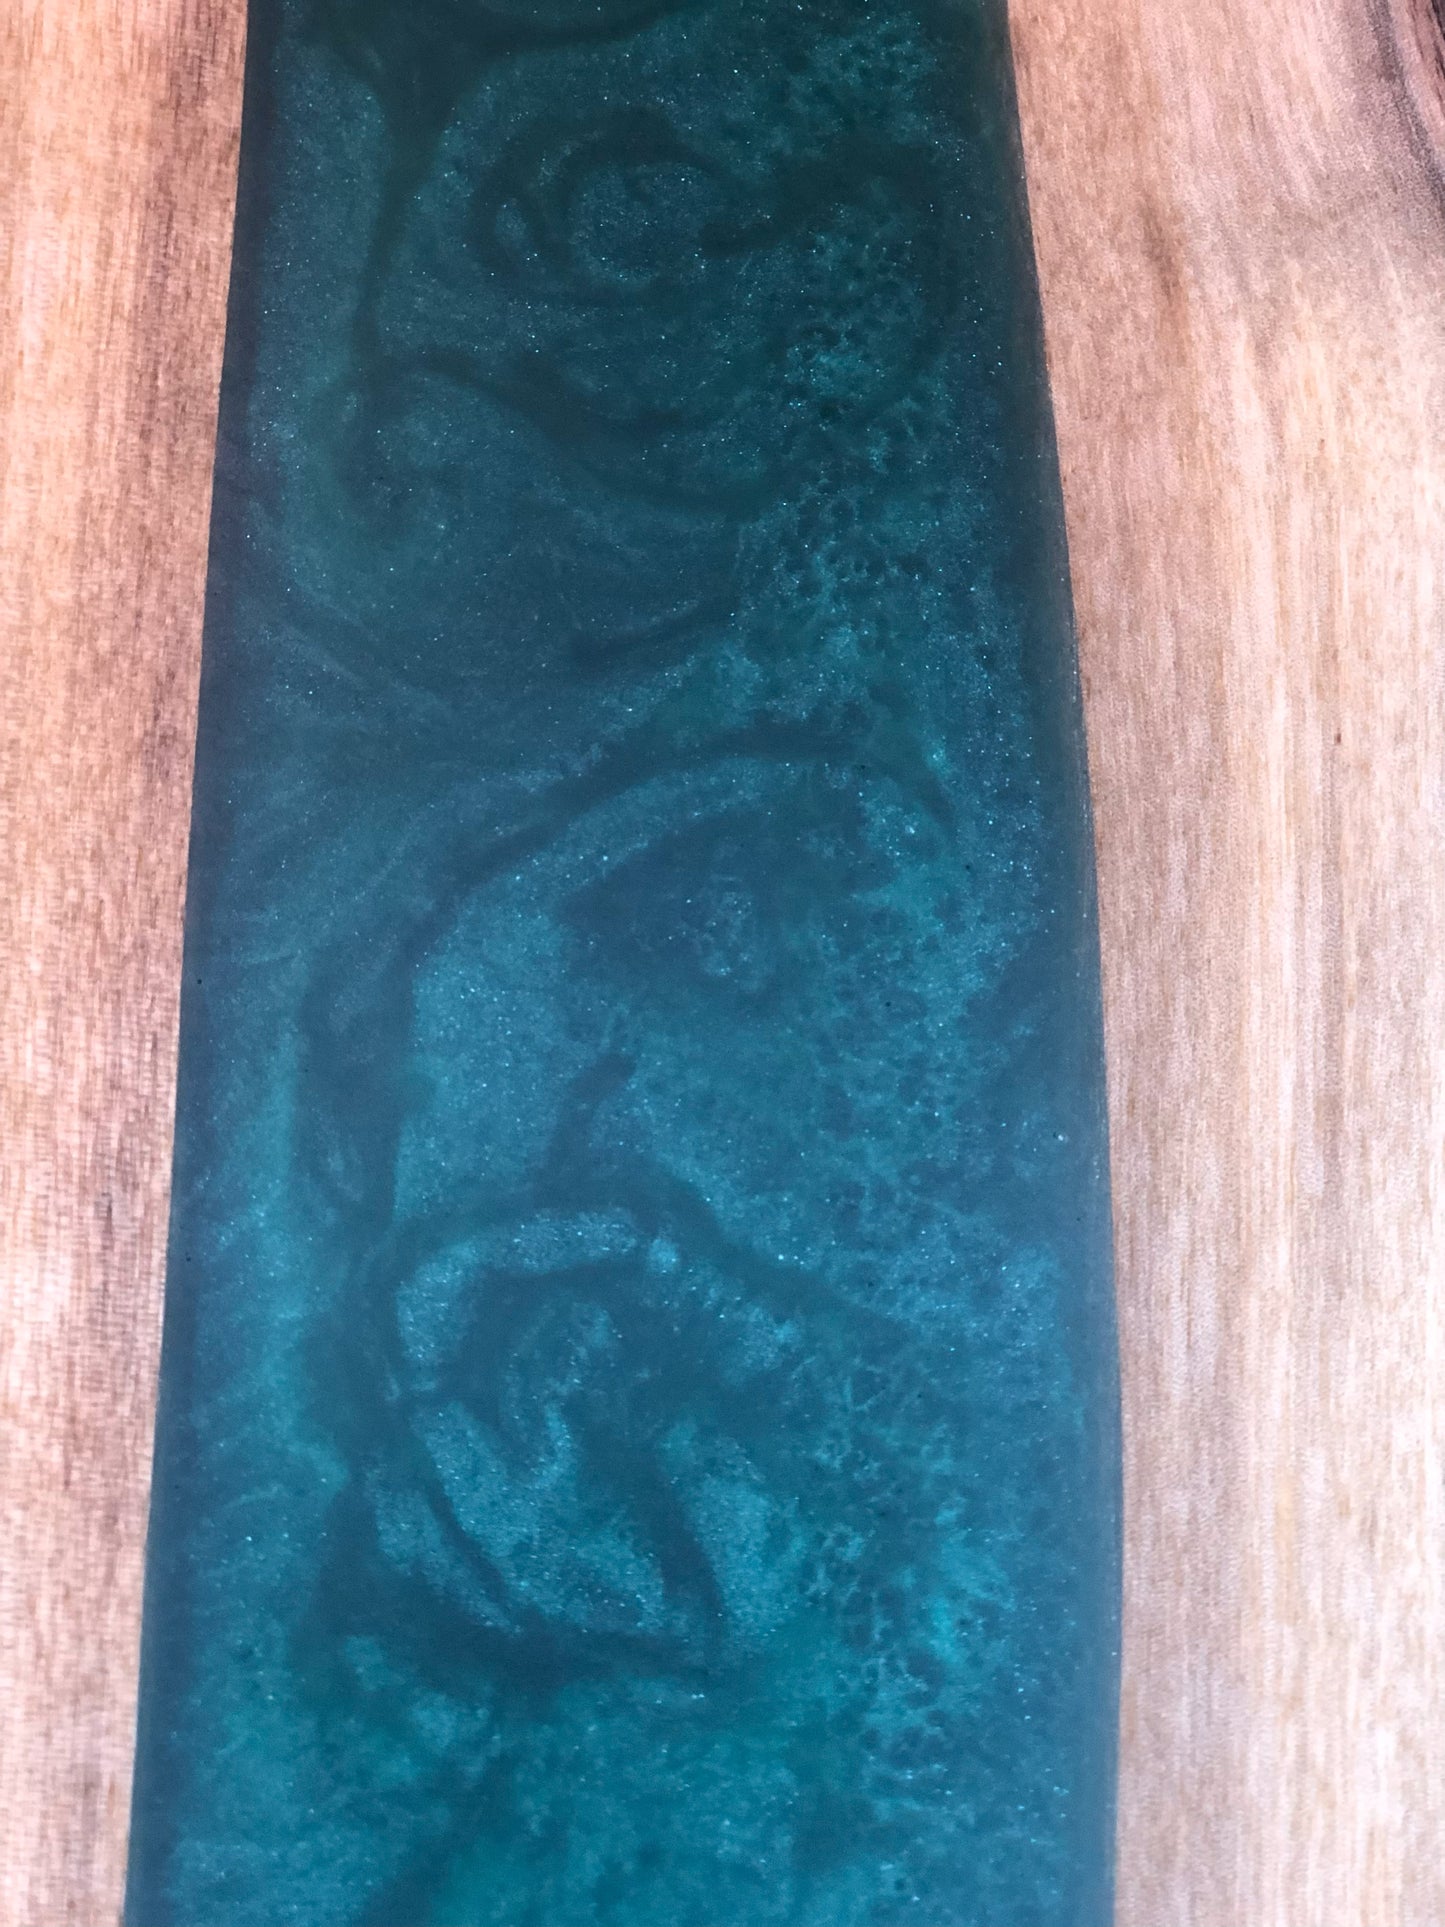 Black Walnut and Dark Ocean Green Epoxy Charcuterie Board, 24"x12"